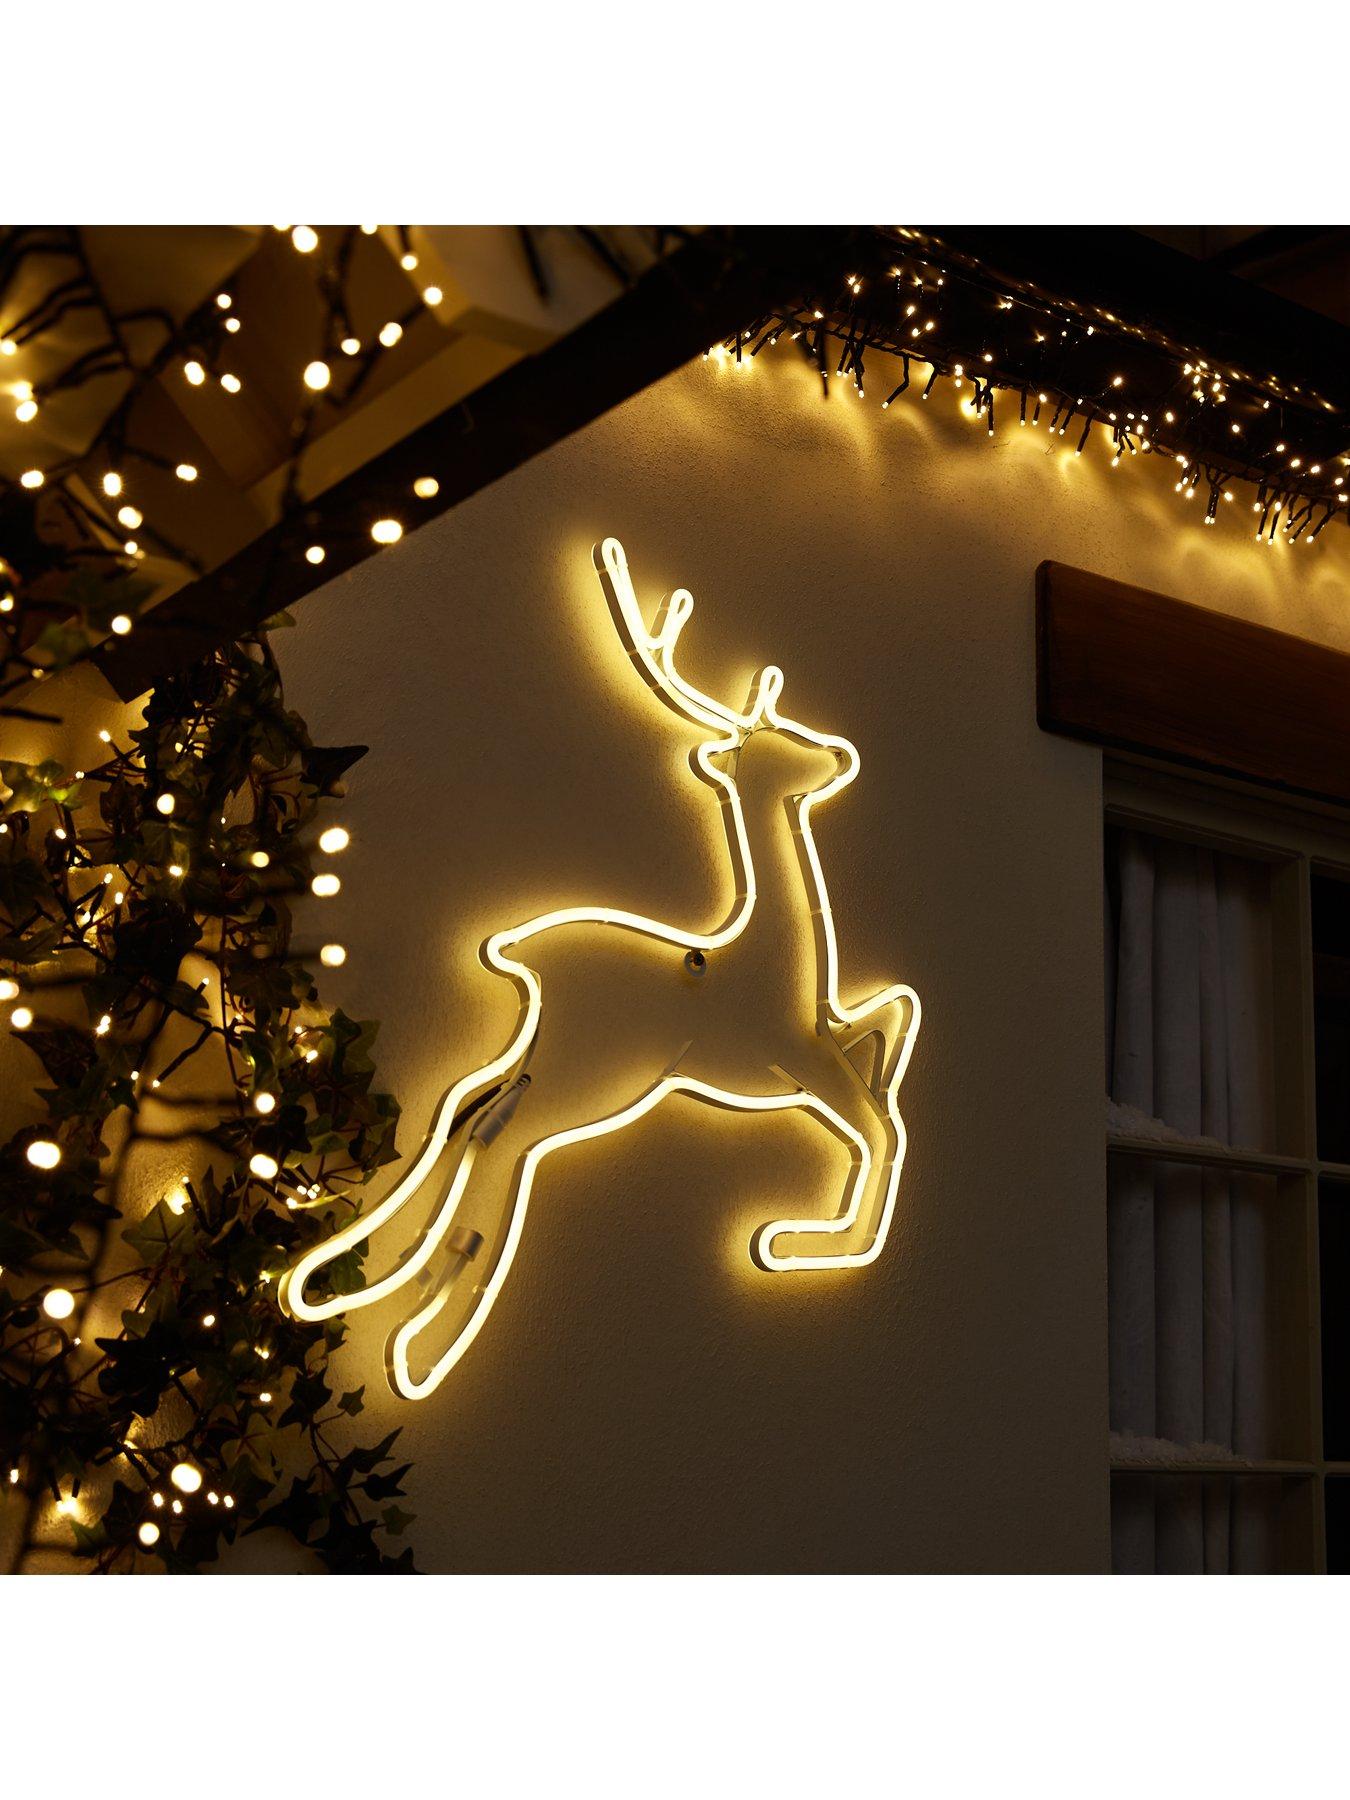 Neon Reindeer Wall Light Outdoor Christmas Decoration